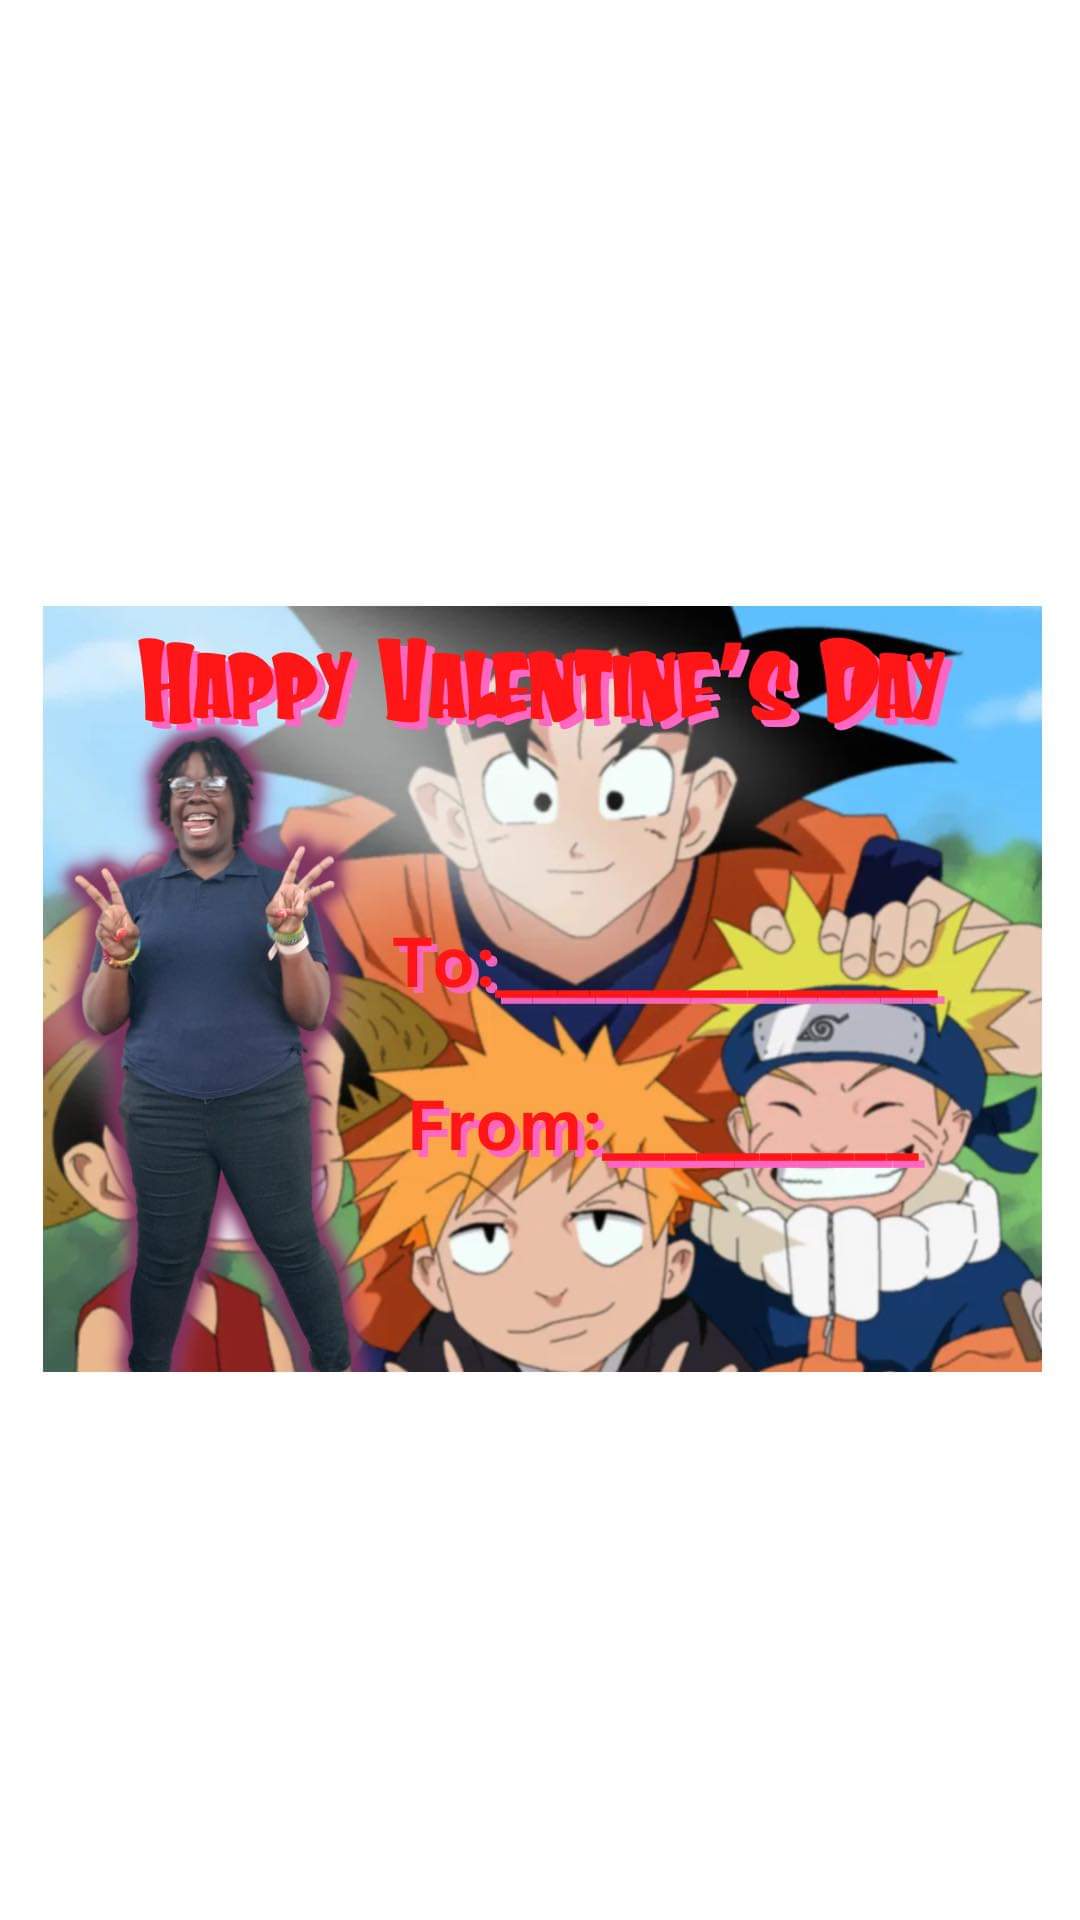 Custom Valentine’s Day Cards For Kids